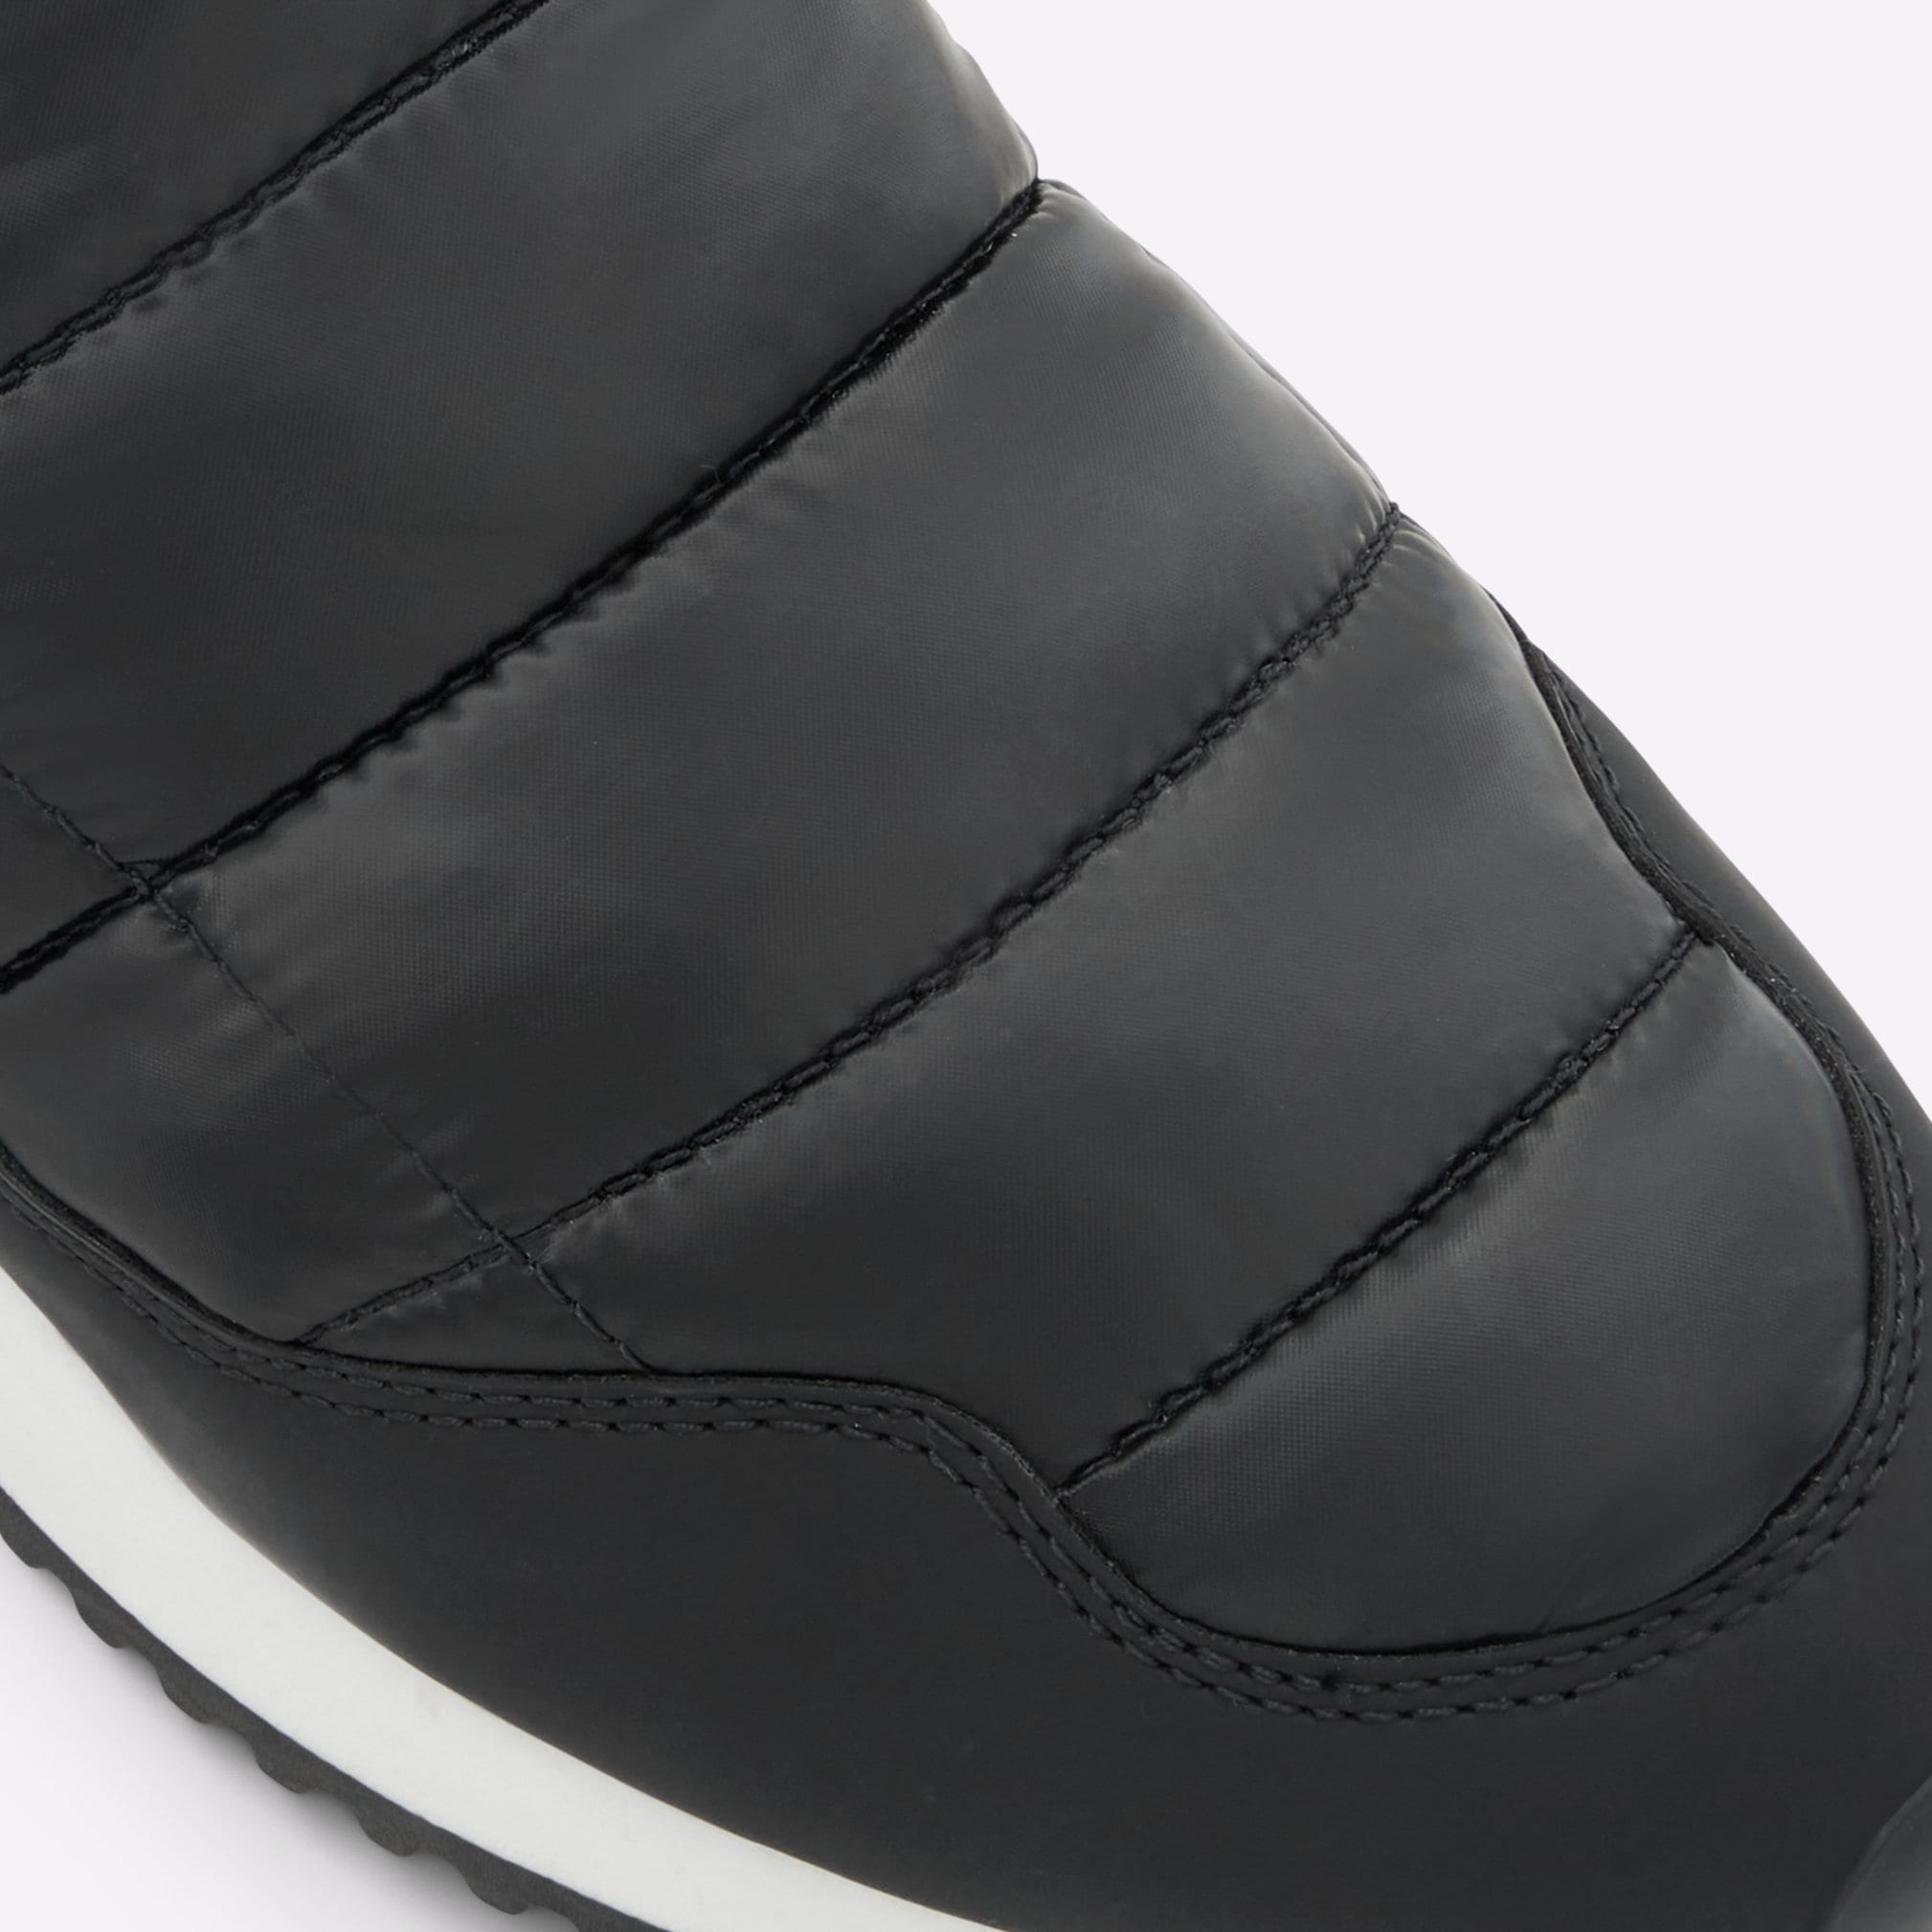 Pufferwalk Women Shoes - Black - ALDO KSA